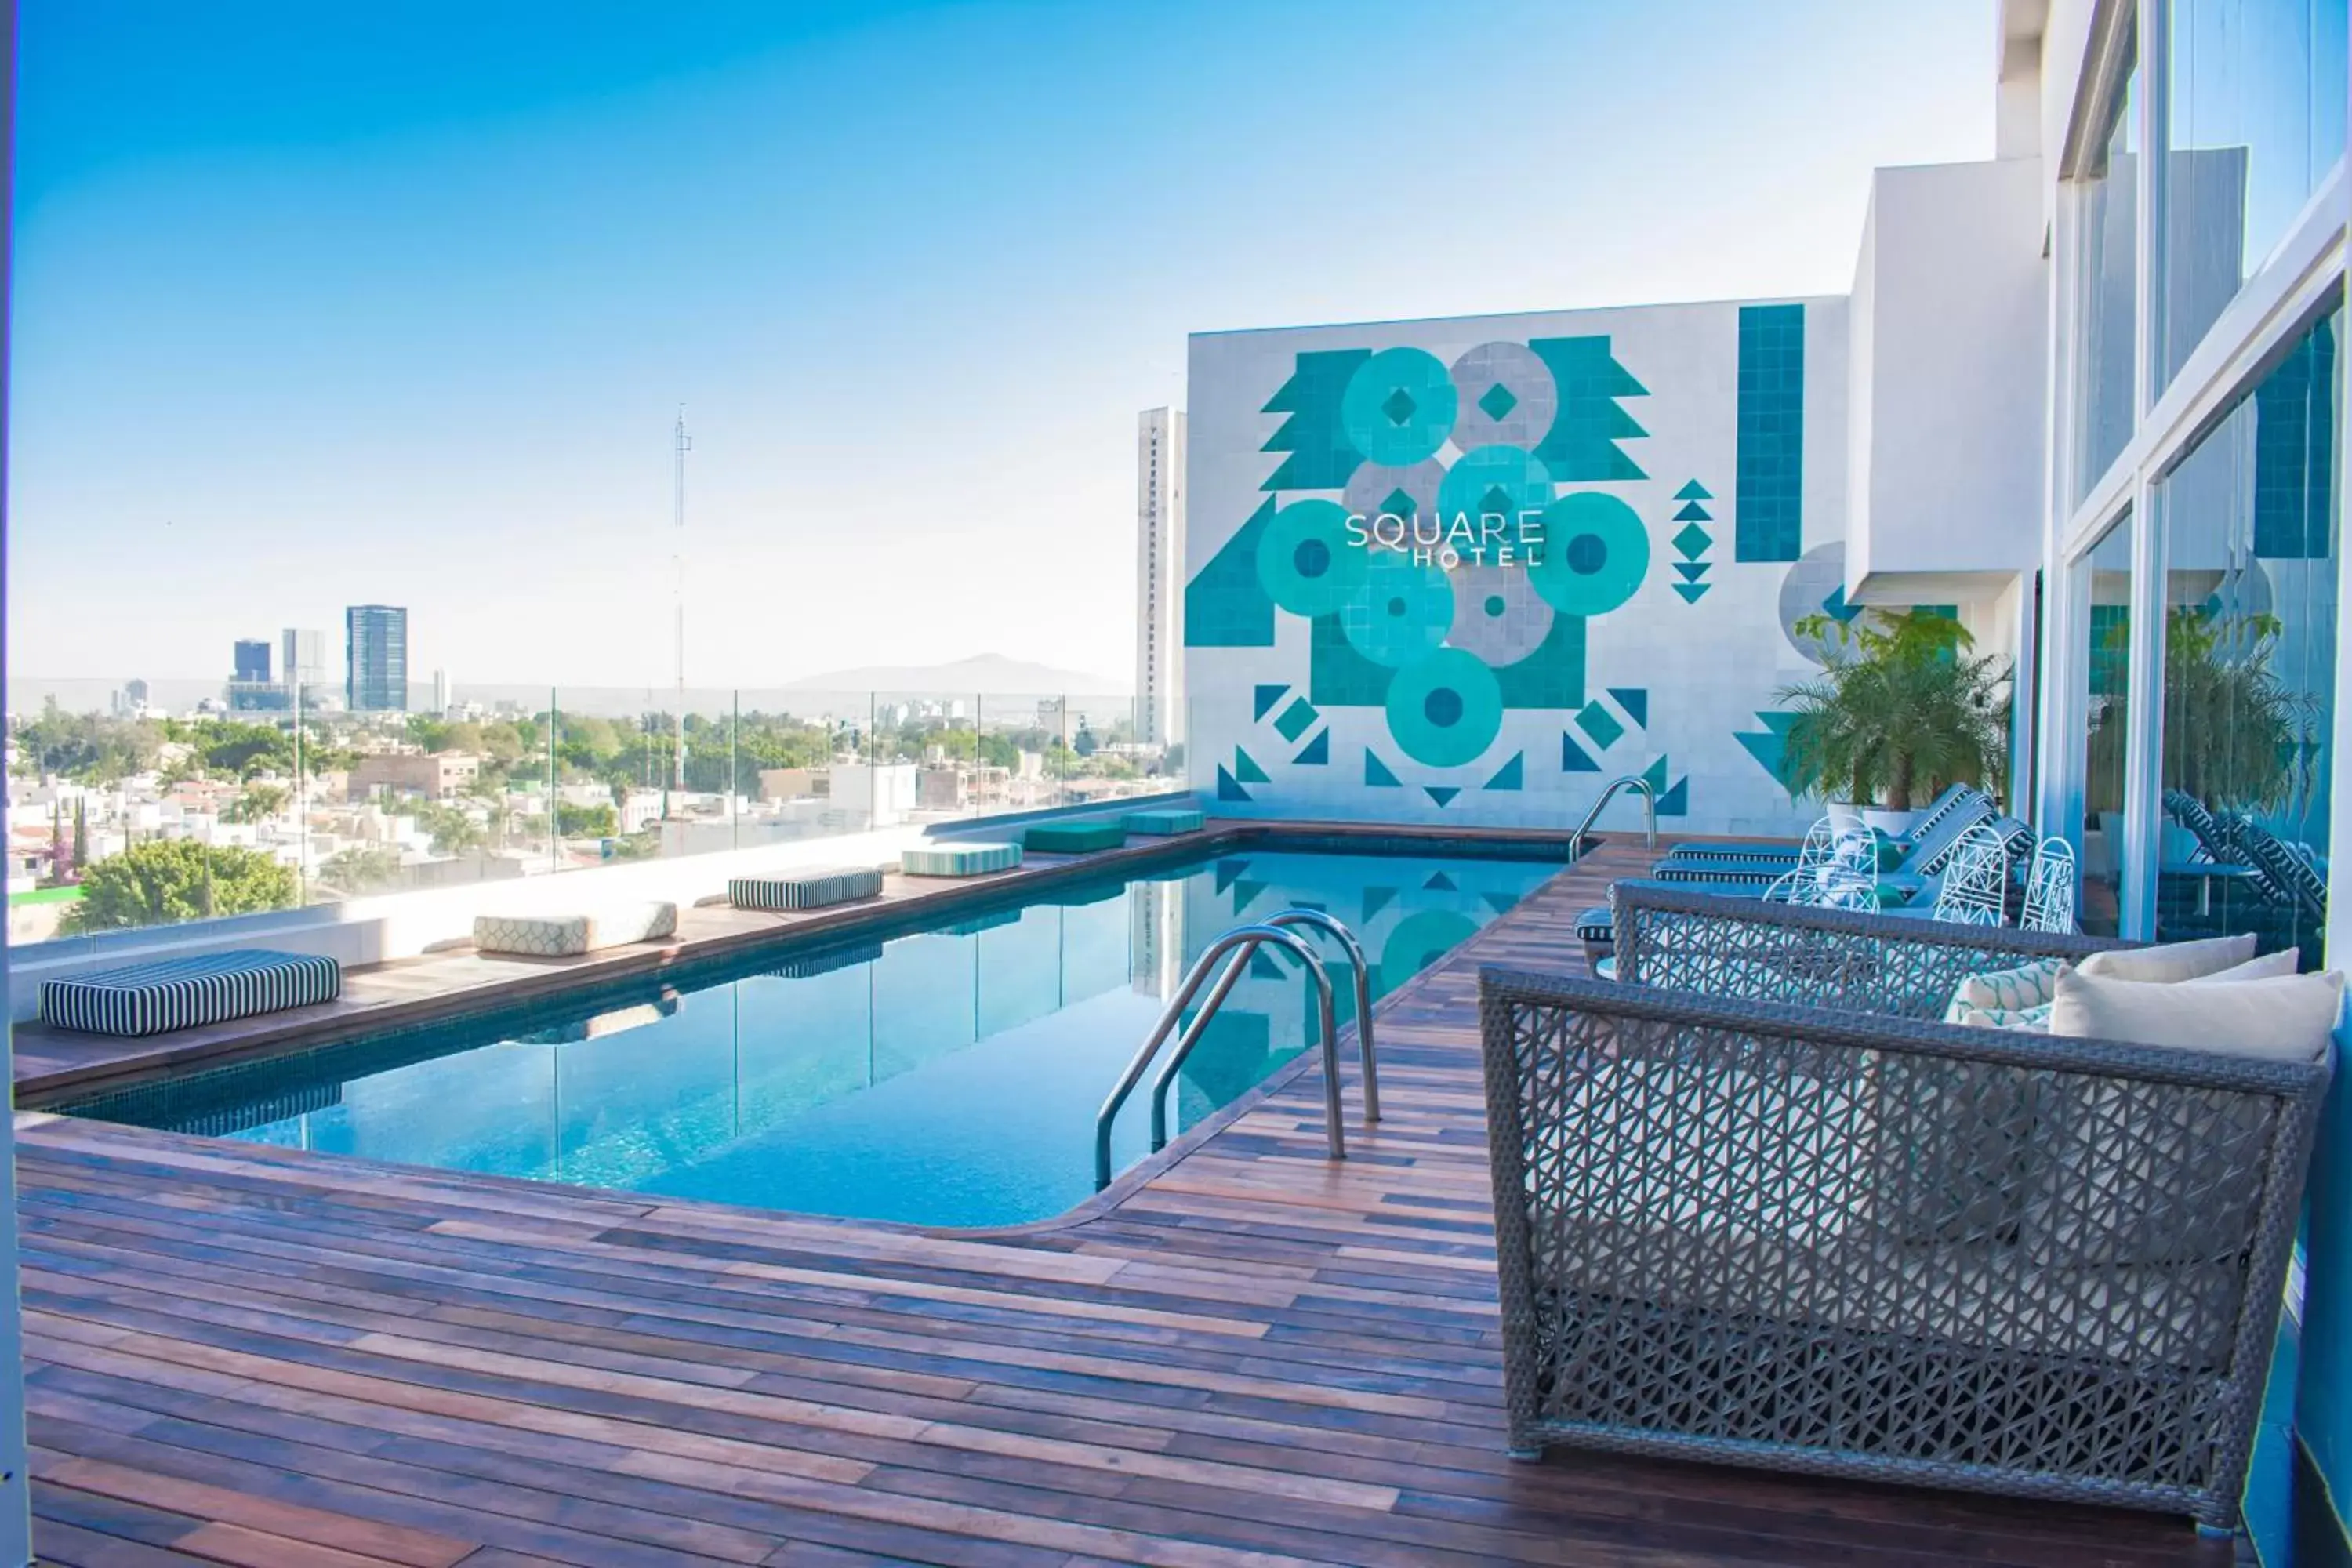 Off site, Swimming Pool in Square Small Luxury Hotel - Providencia